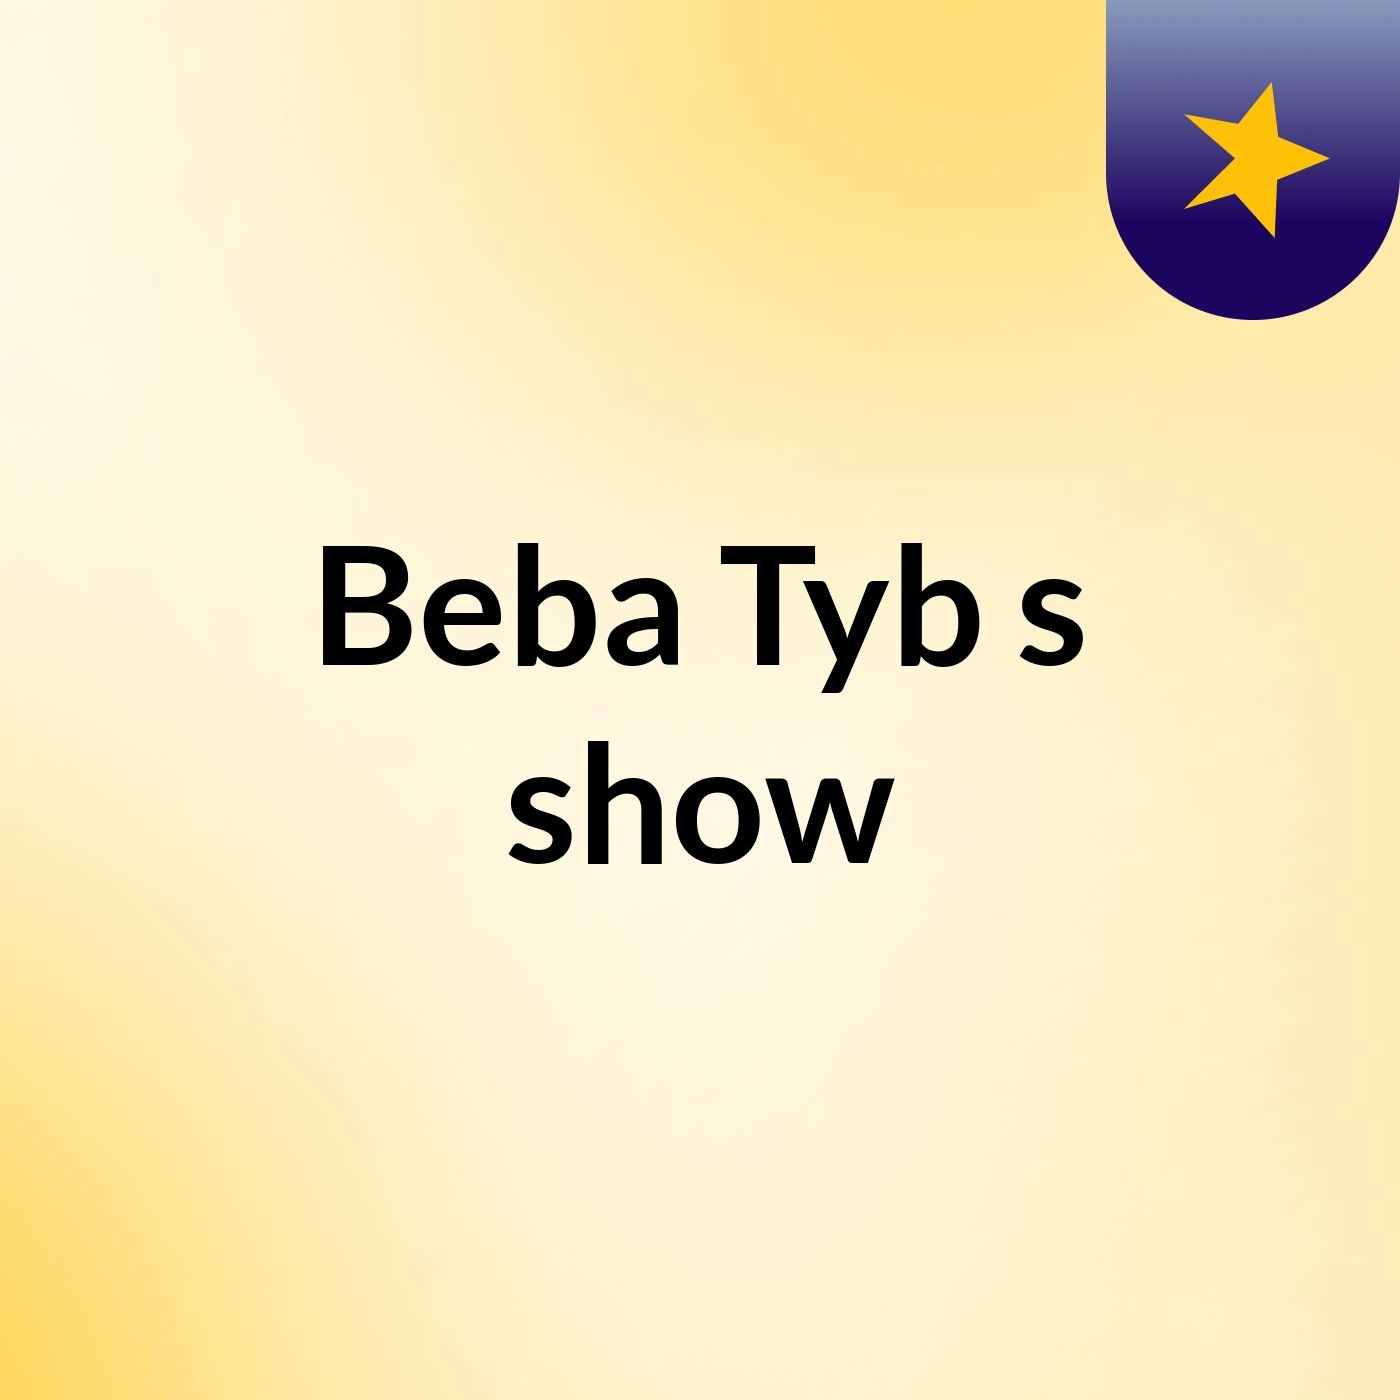 Beba Tyb's show